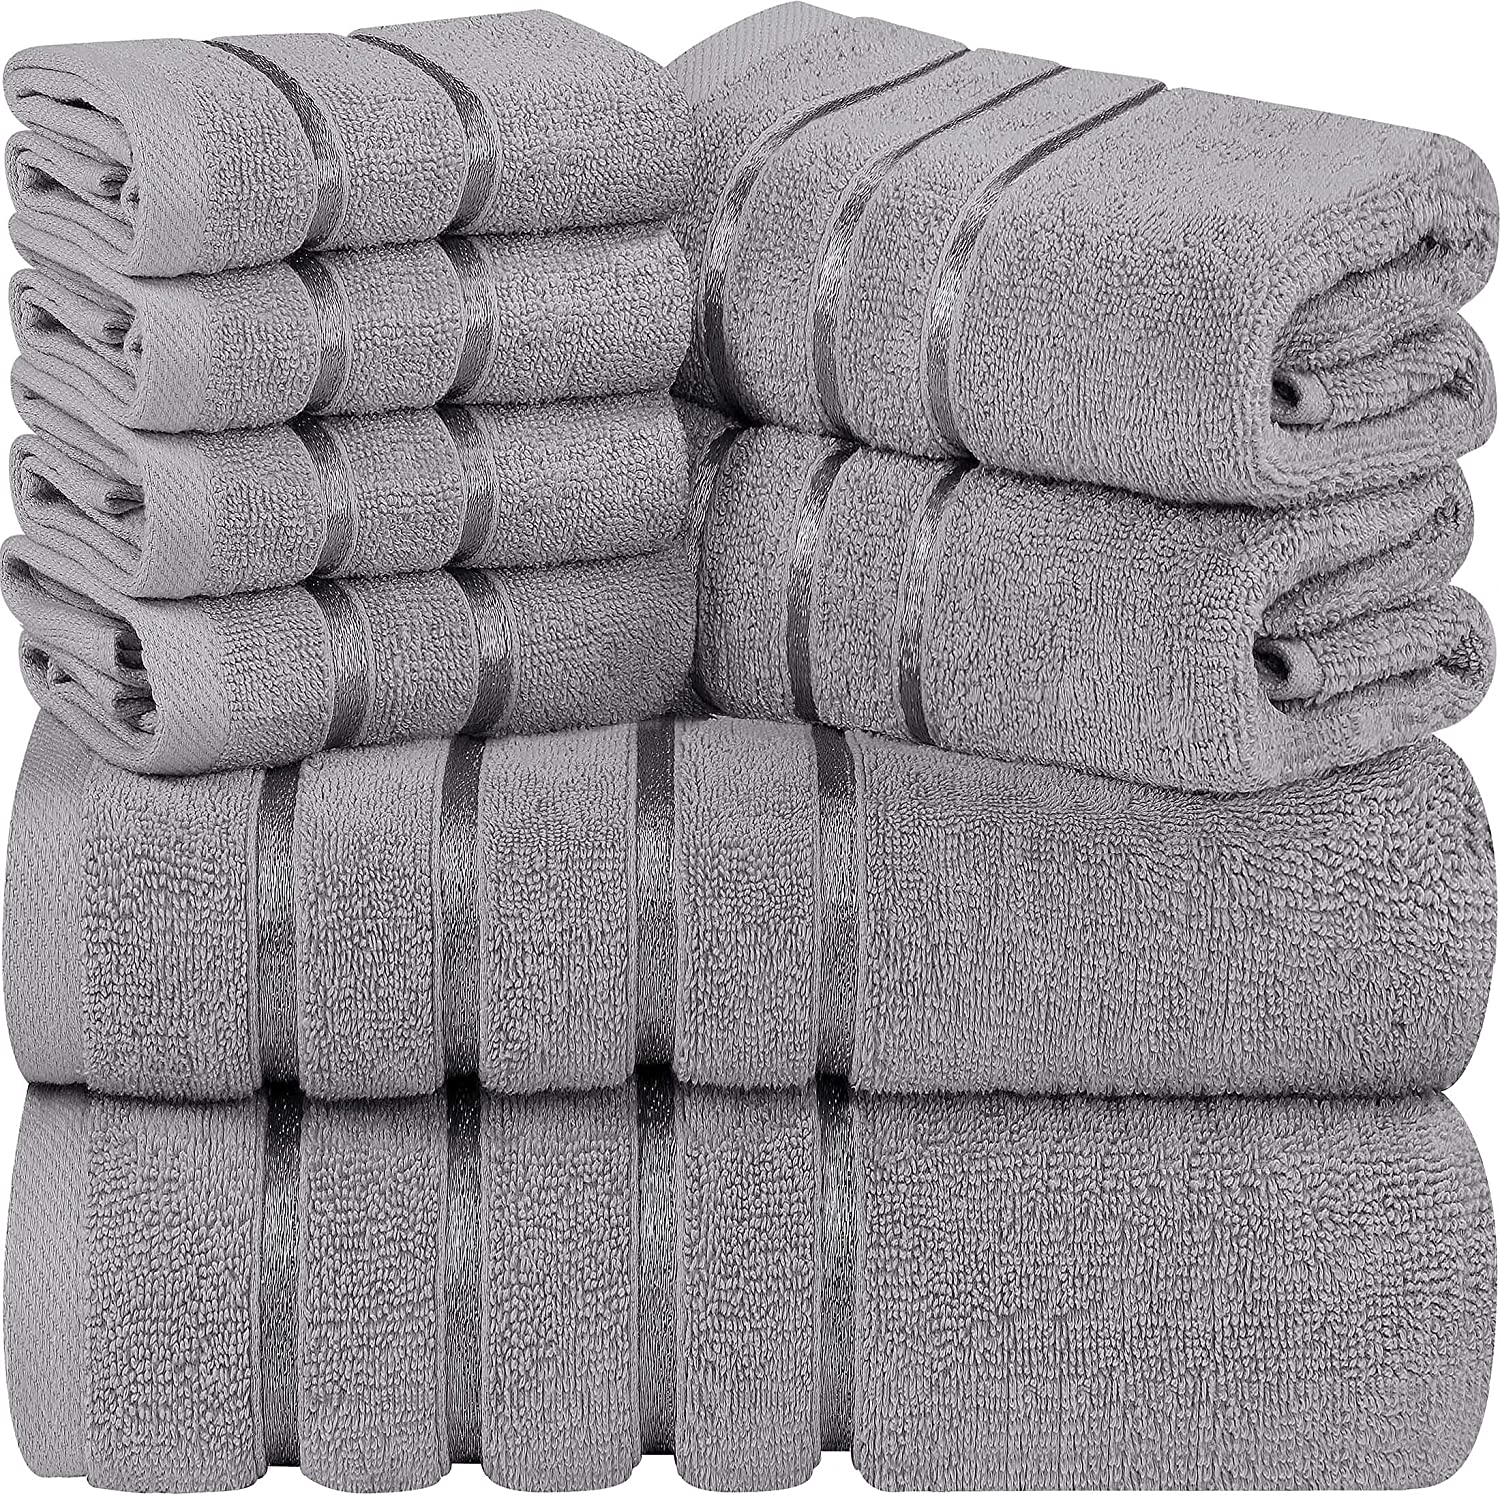 Towels - Luxury Bath Towel Sets & Hand Towels